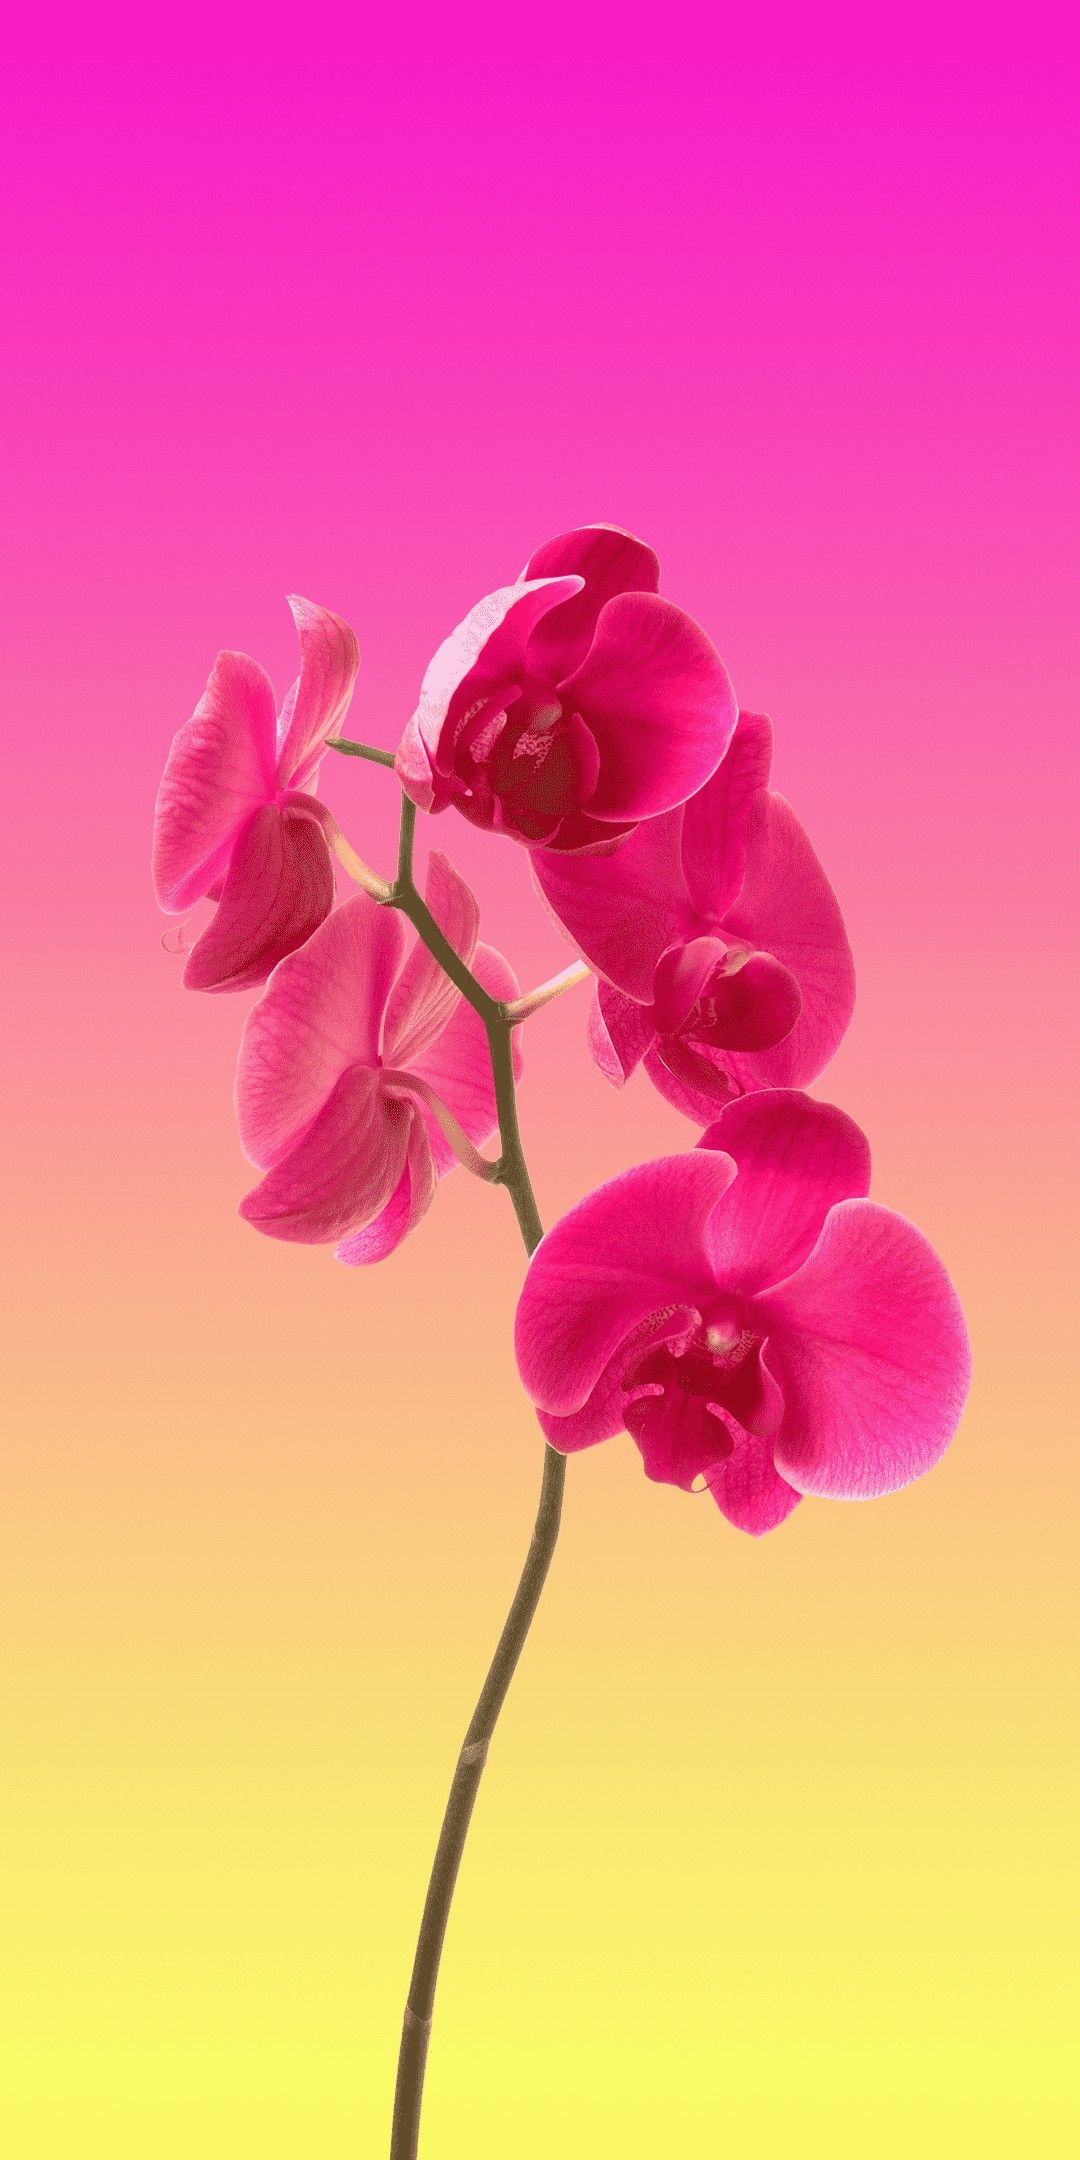 Orchid Minimal Wallpaper 1080X2160. Flower iphone wallpaper, HD flower wallpaper, Orchid wallpaper